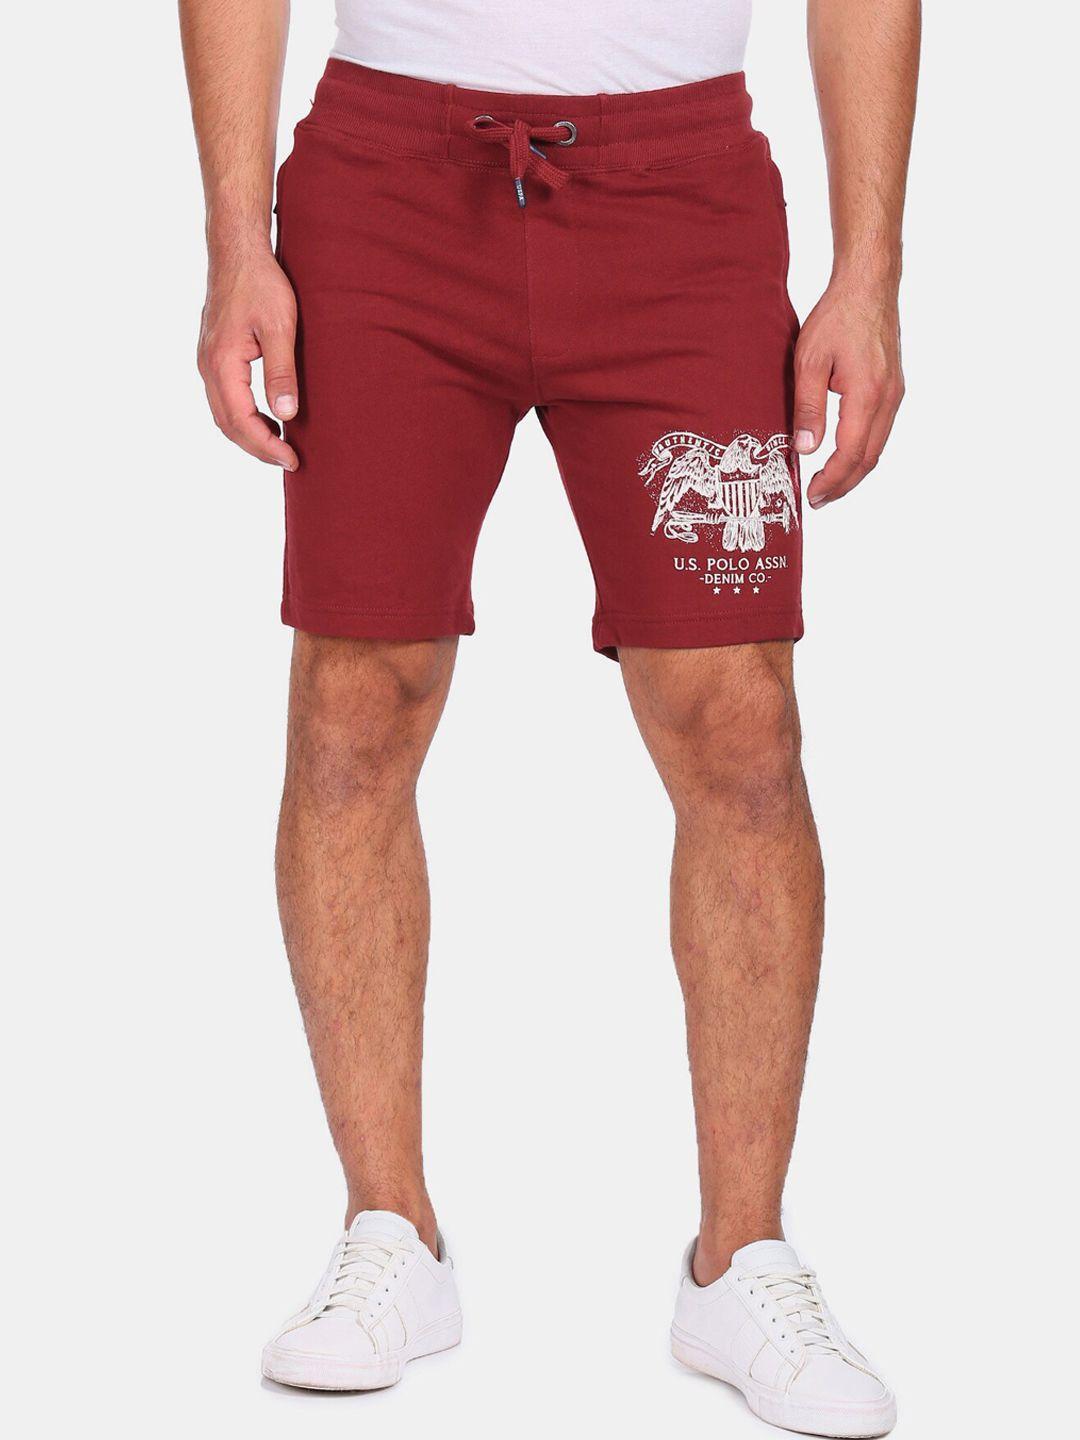 u.s. polo assn. denim co. men maroon printed regular shorts